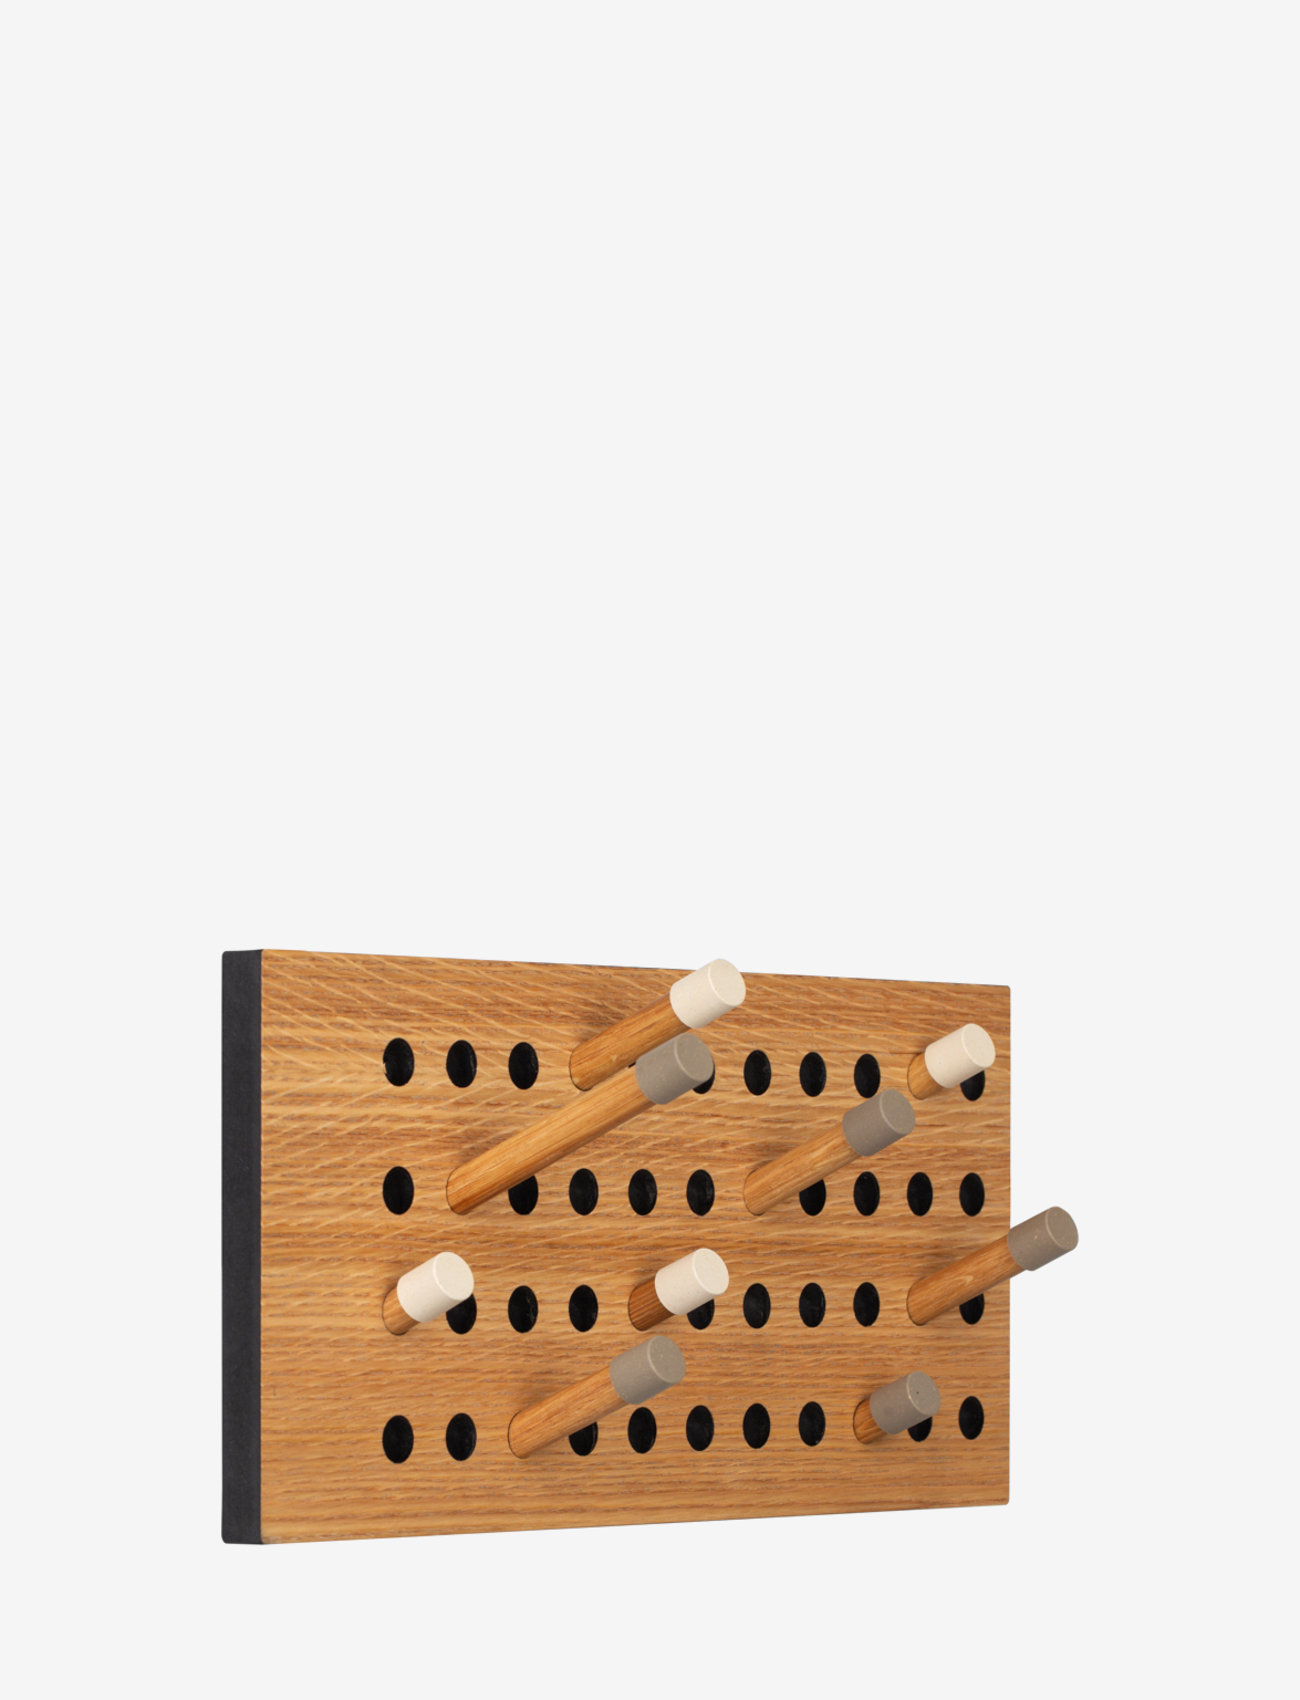 We Do Wood - Scoreboard Small, Horizontal - knagger & stativ - fsc oak veneer, dots with upcycled plastic - 1